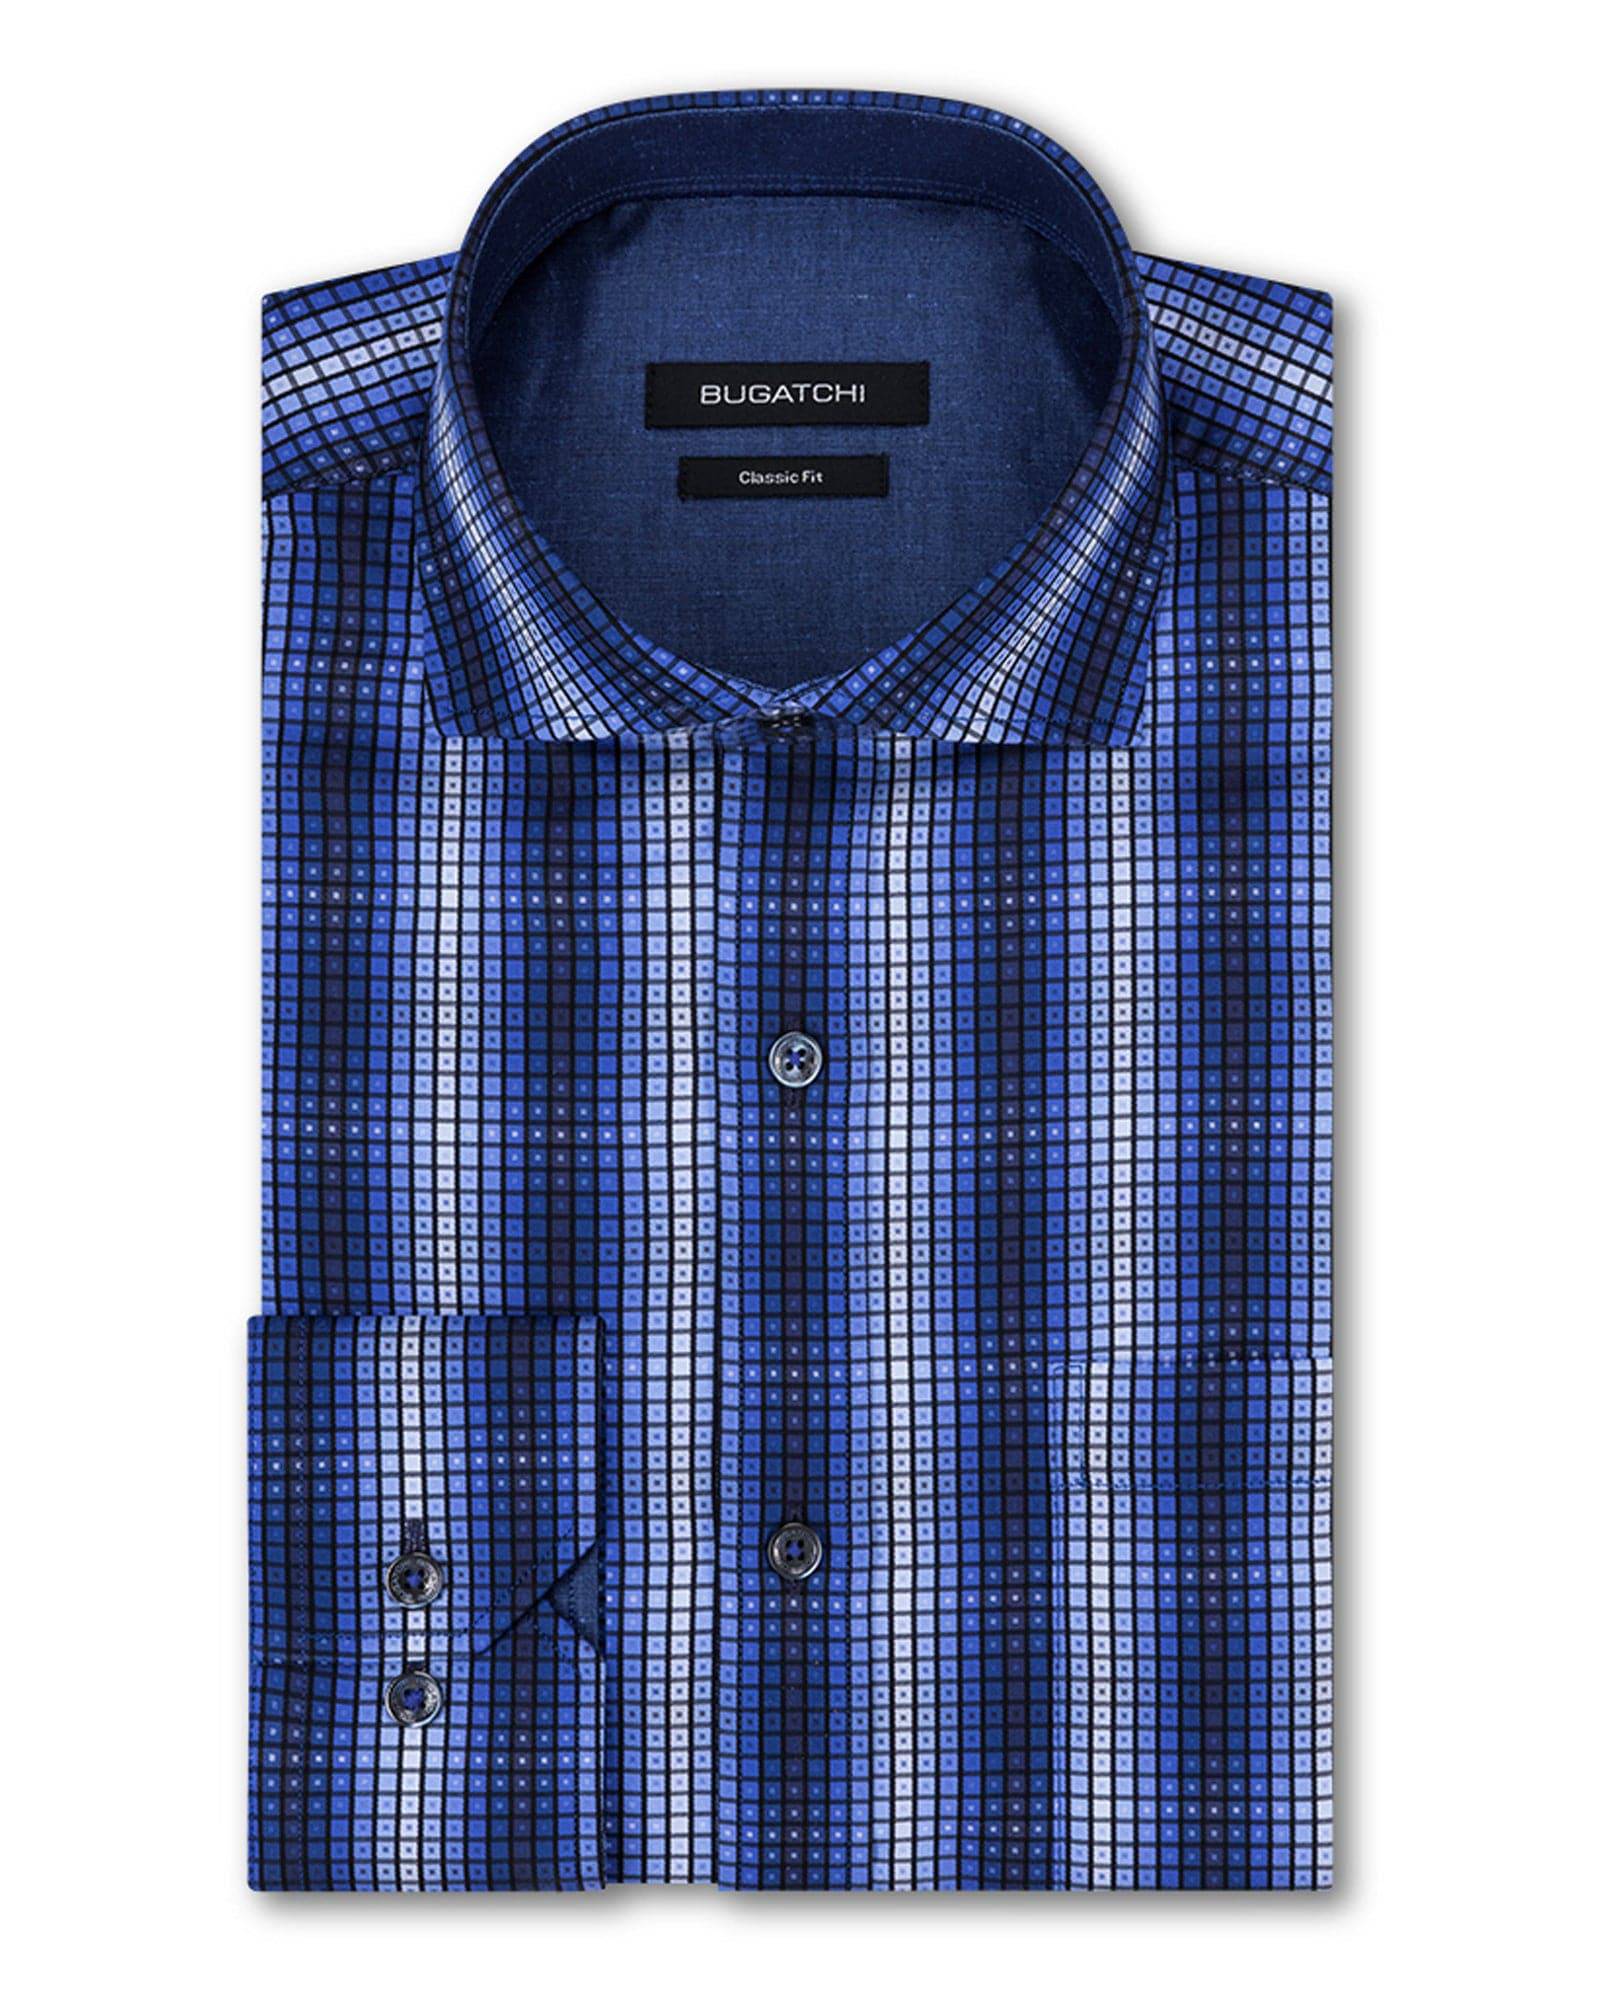 Bugatchi Night Blue Tonal Check Button Up Sport Shirt - Rainwater's Men's Clothing and Tuxedo Rental